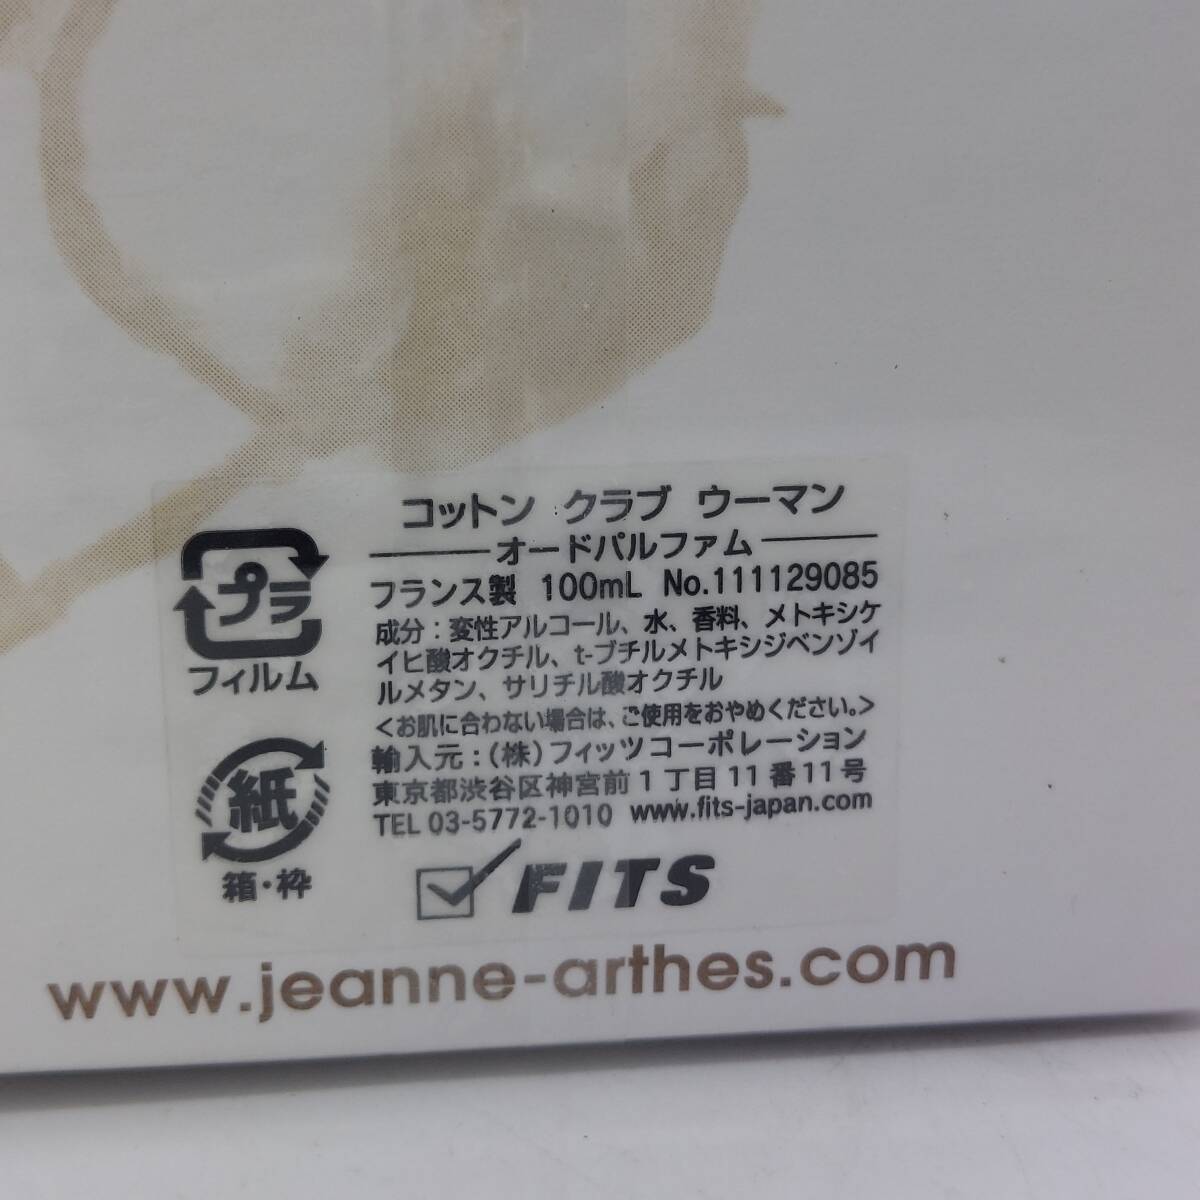 [ полный количество / новый старый товар ] Jeanne Arthes хлопок Club u- man 100ml (6132)